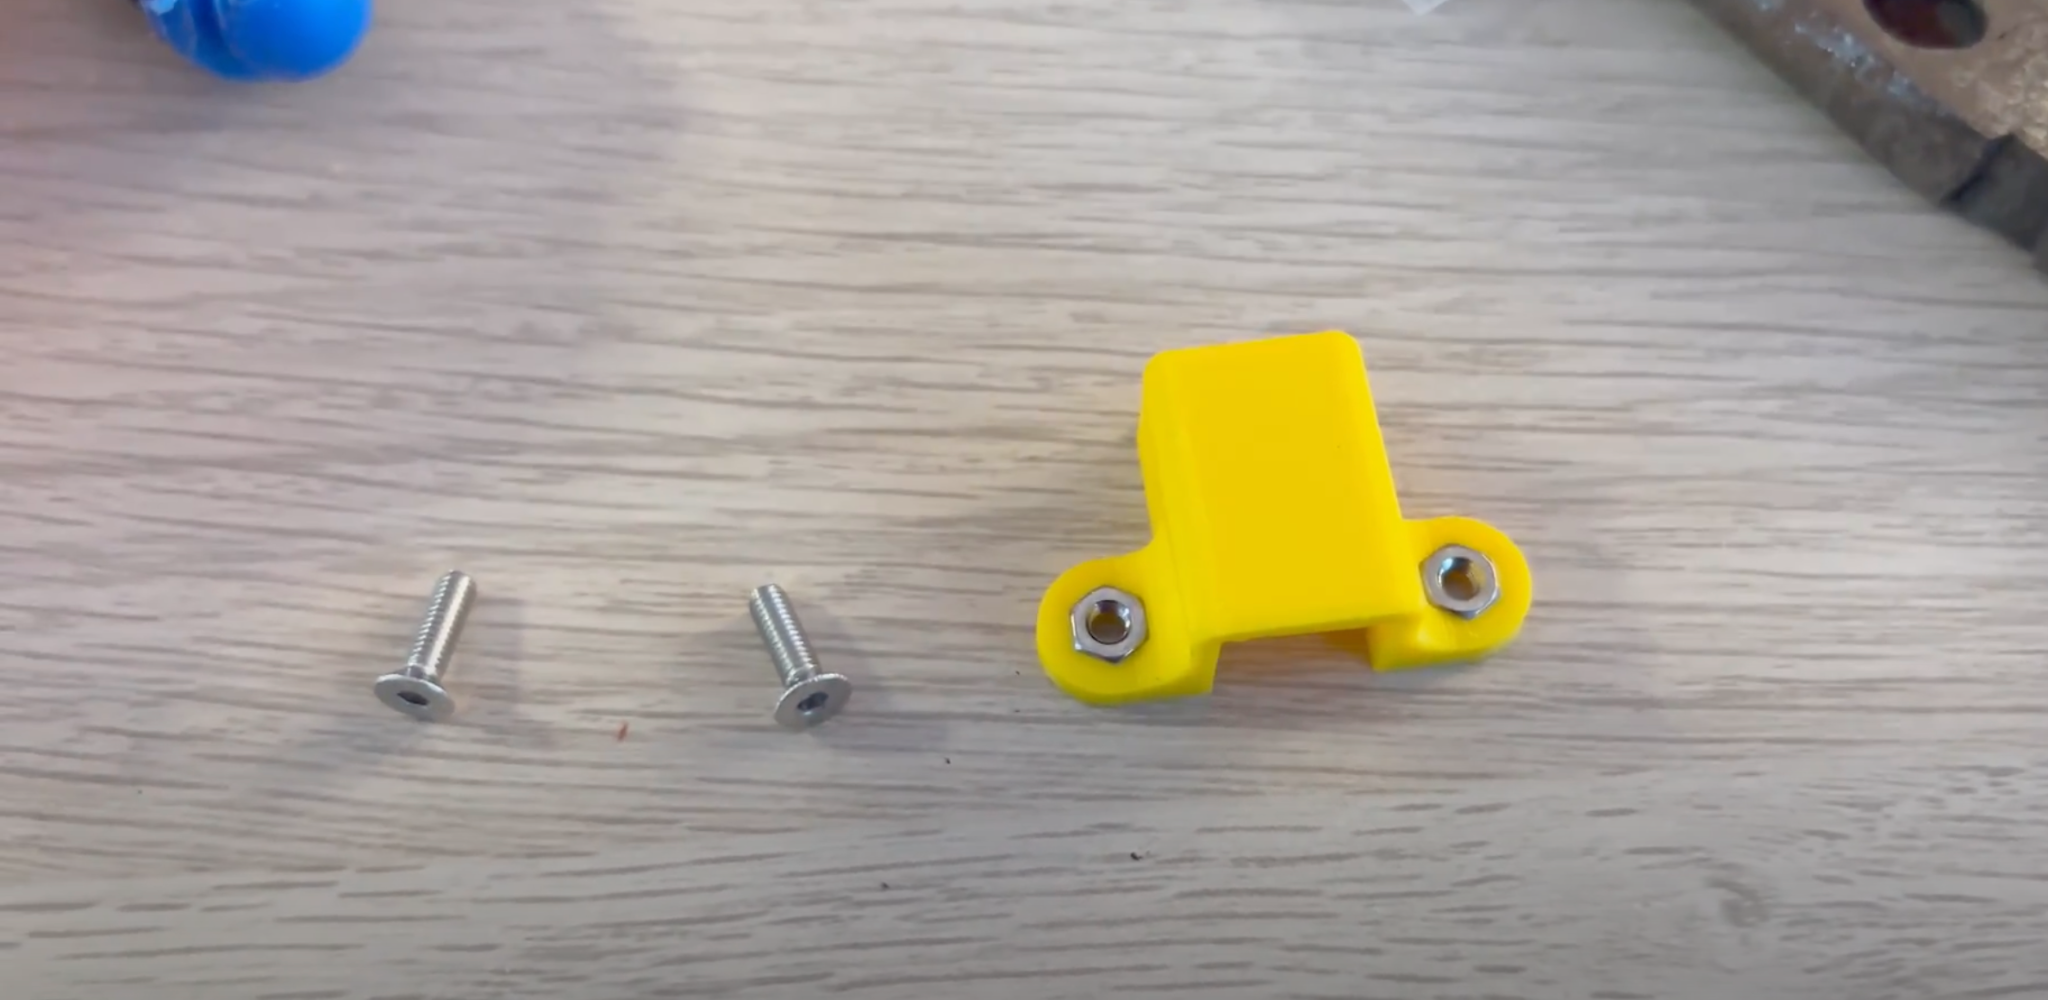 3D printed Raspberry Pi robot